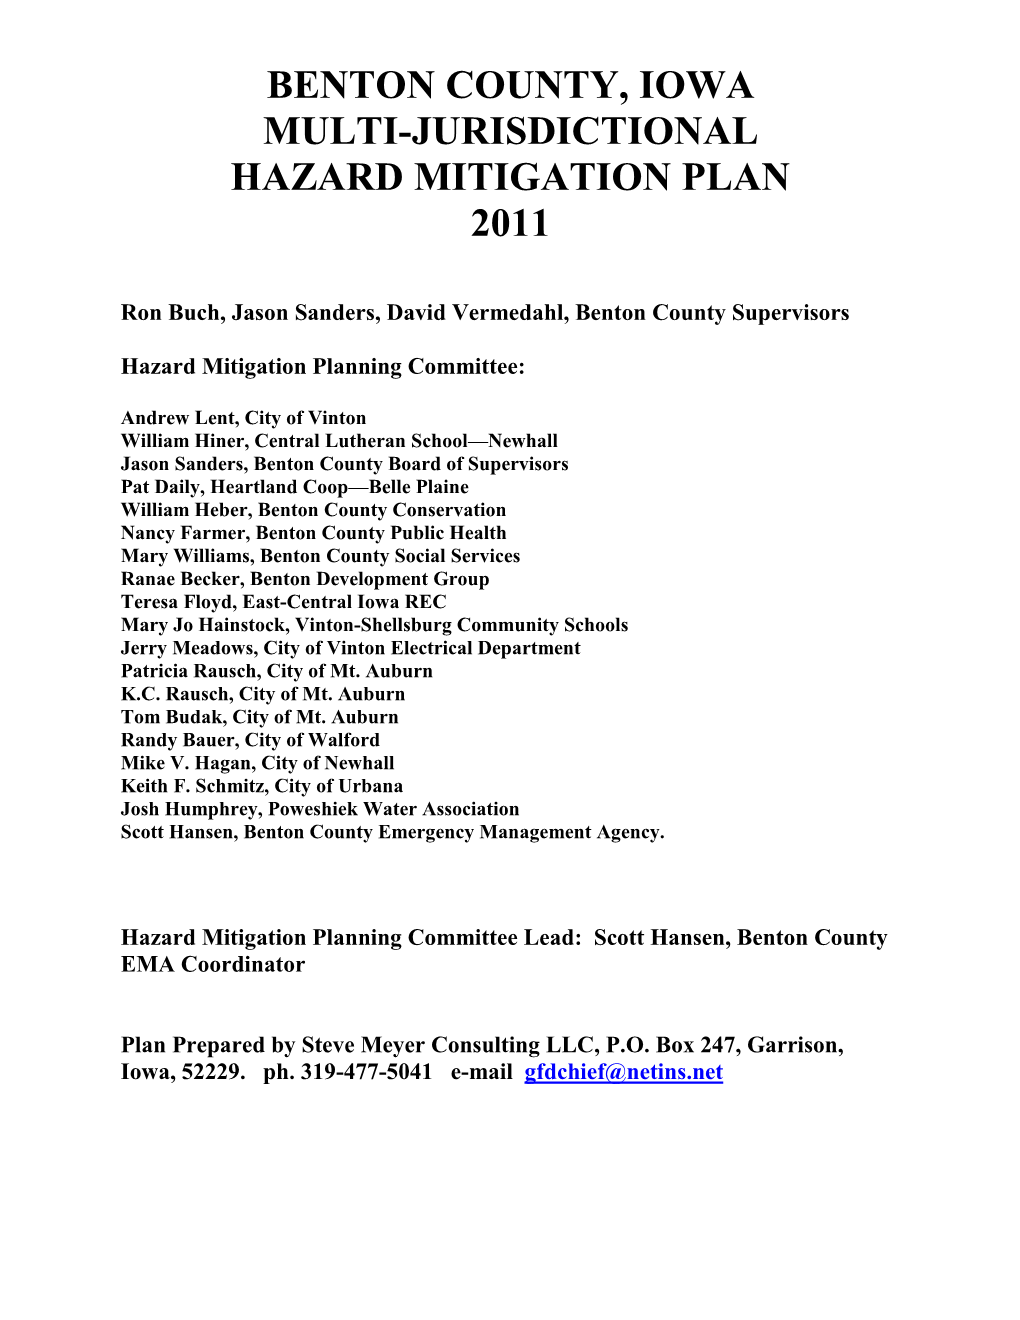 Benton County 2011 Hazard Mitigation Plan